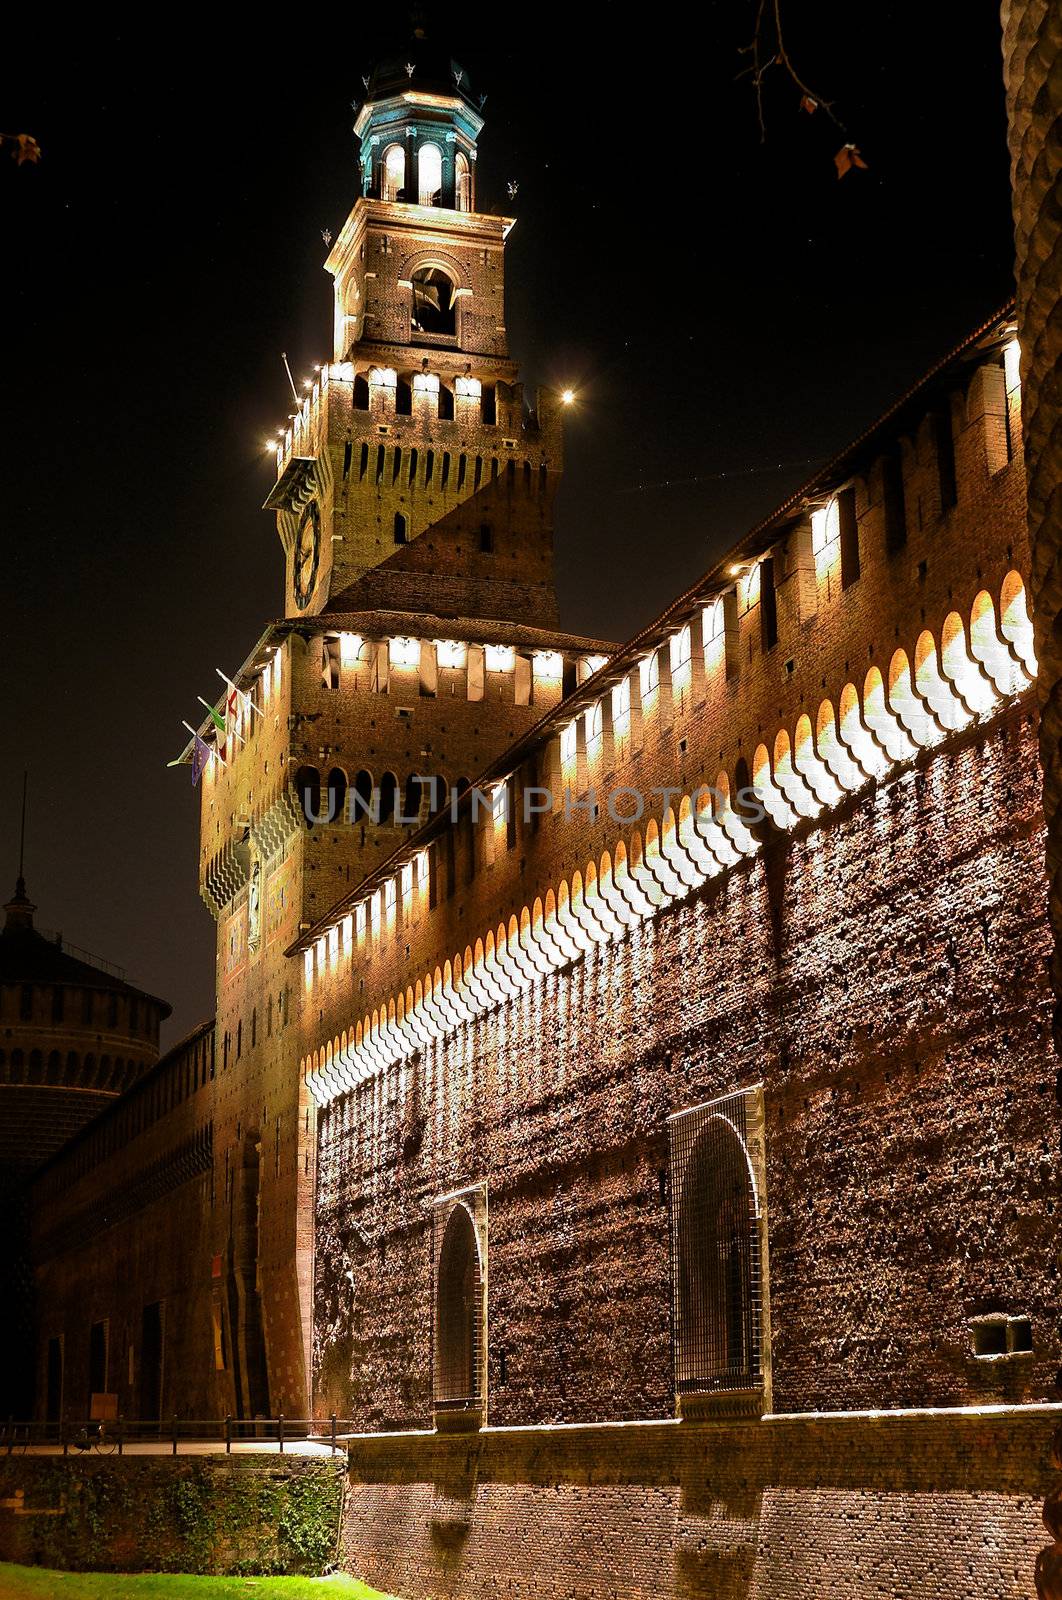 mediaeval castle at night (3) - Castello sforzesco - Milan Italy